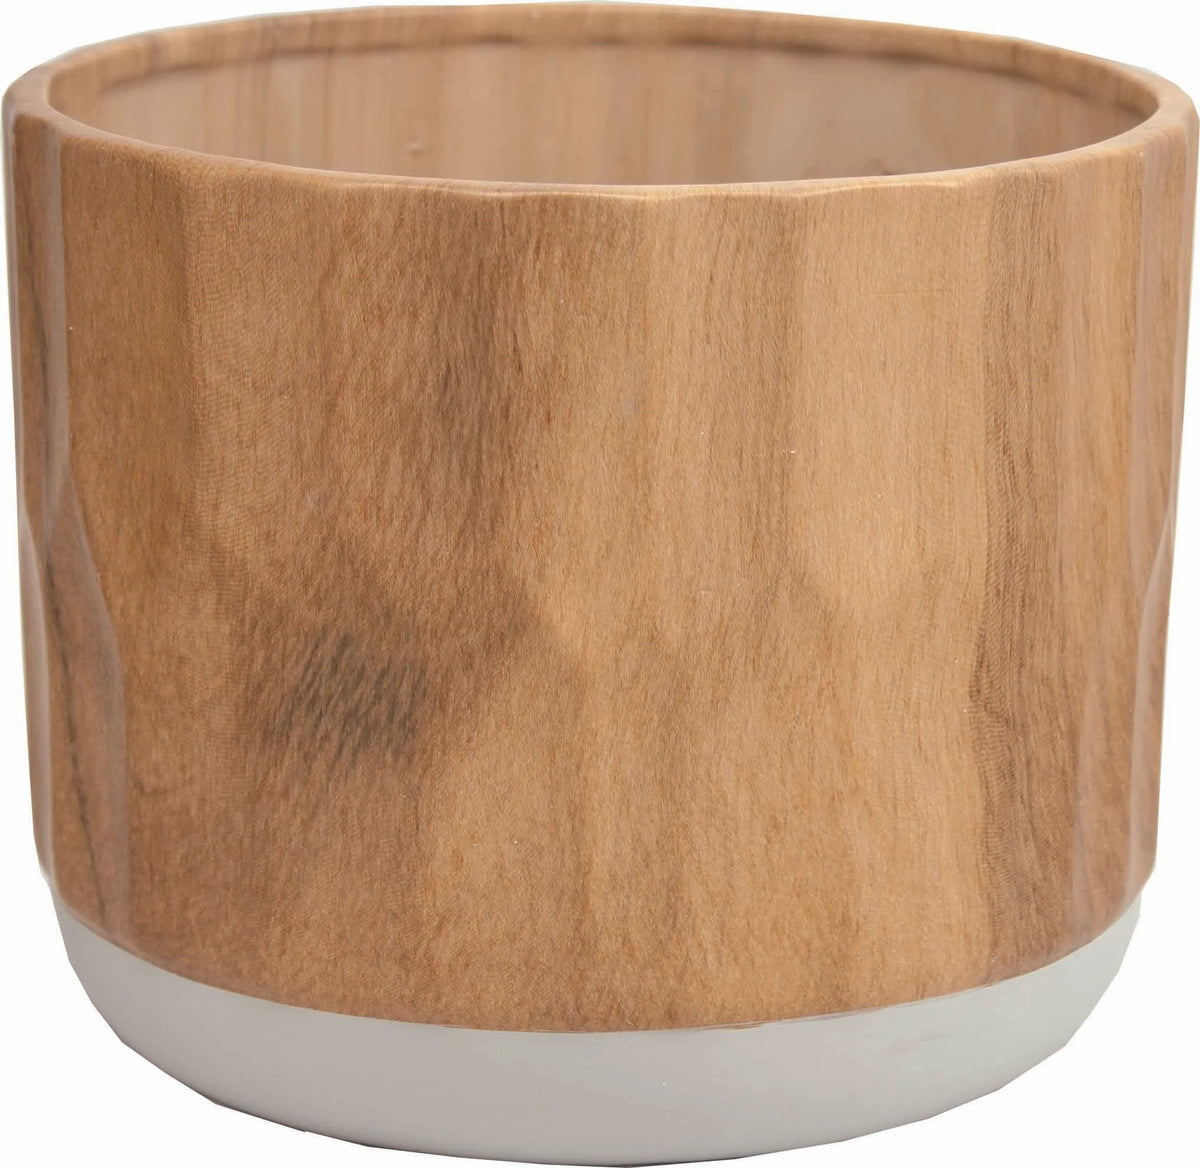 Pot style bois - 6.69X5.5"H WOOD GRAIN FINISH DOLOMITE CONTAINER